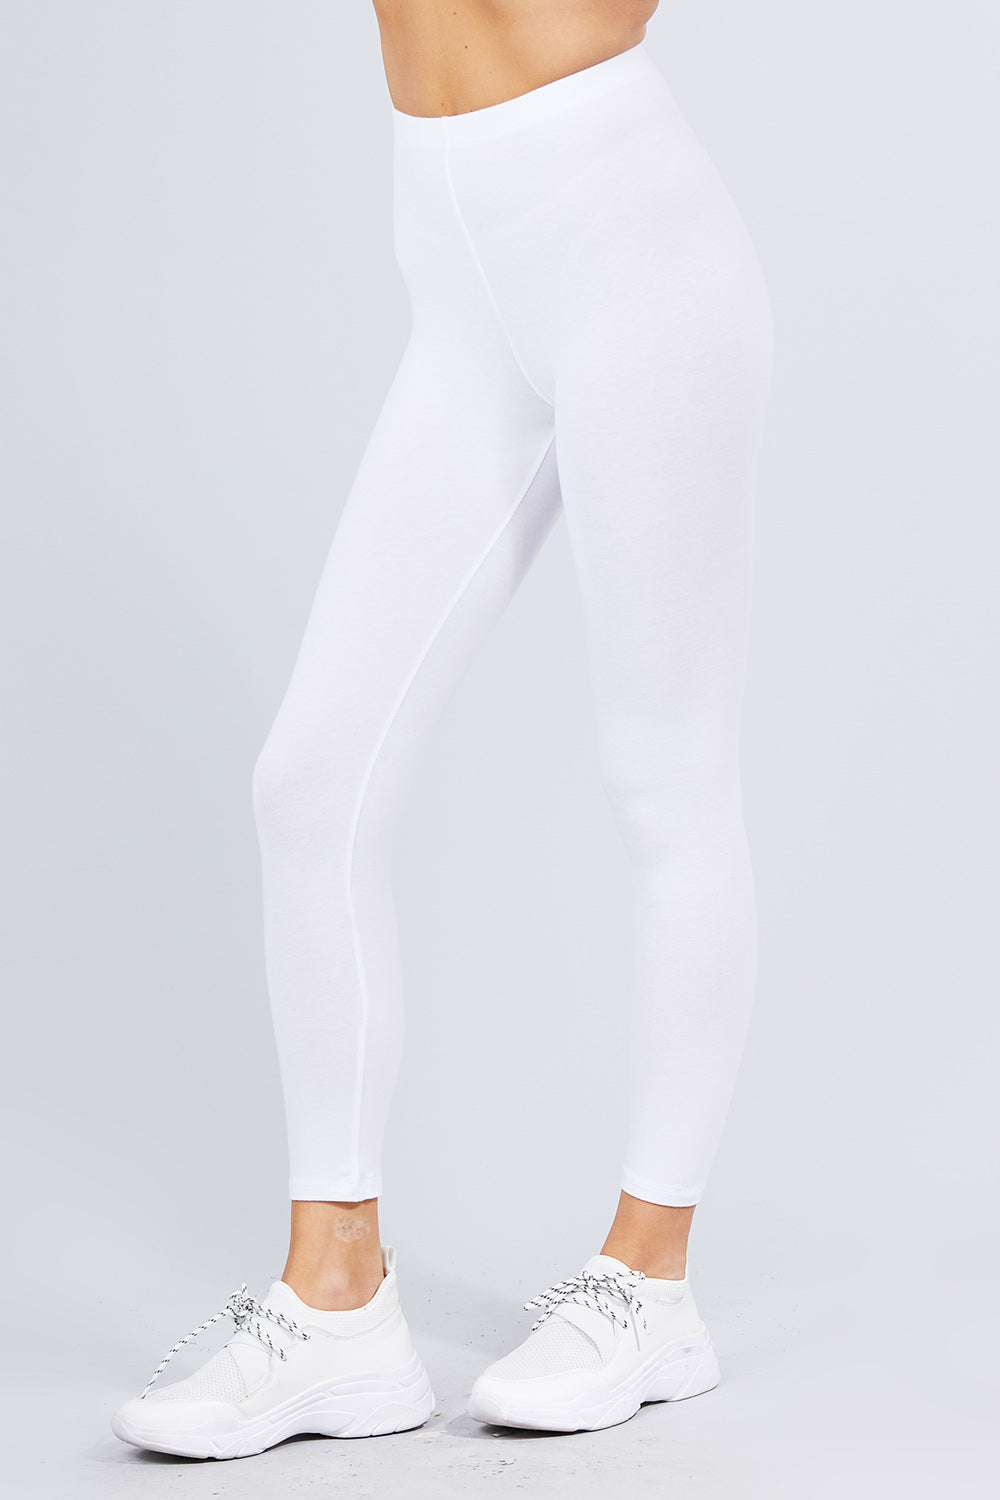 White Stuff Maddie Women's Cotton Leggings Full Length Soft Ladies Trousers